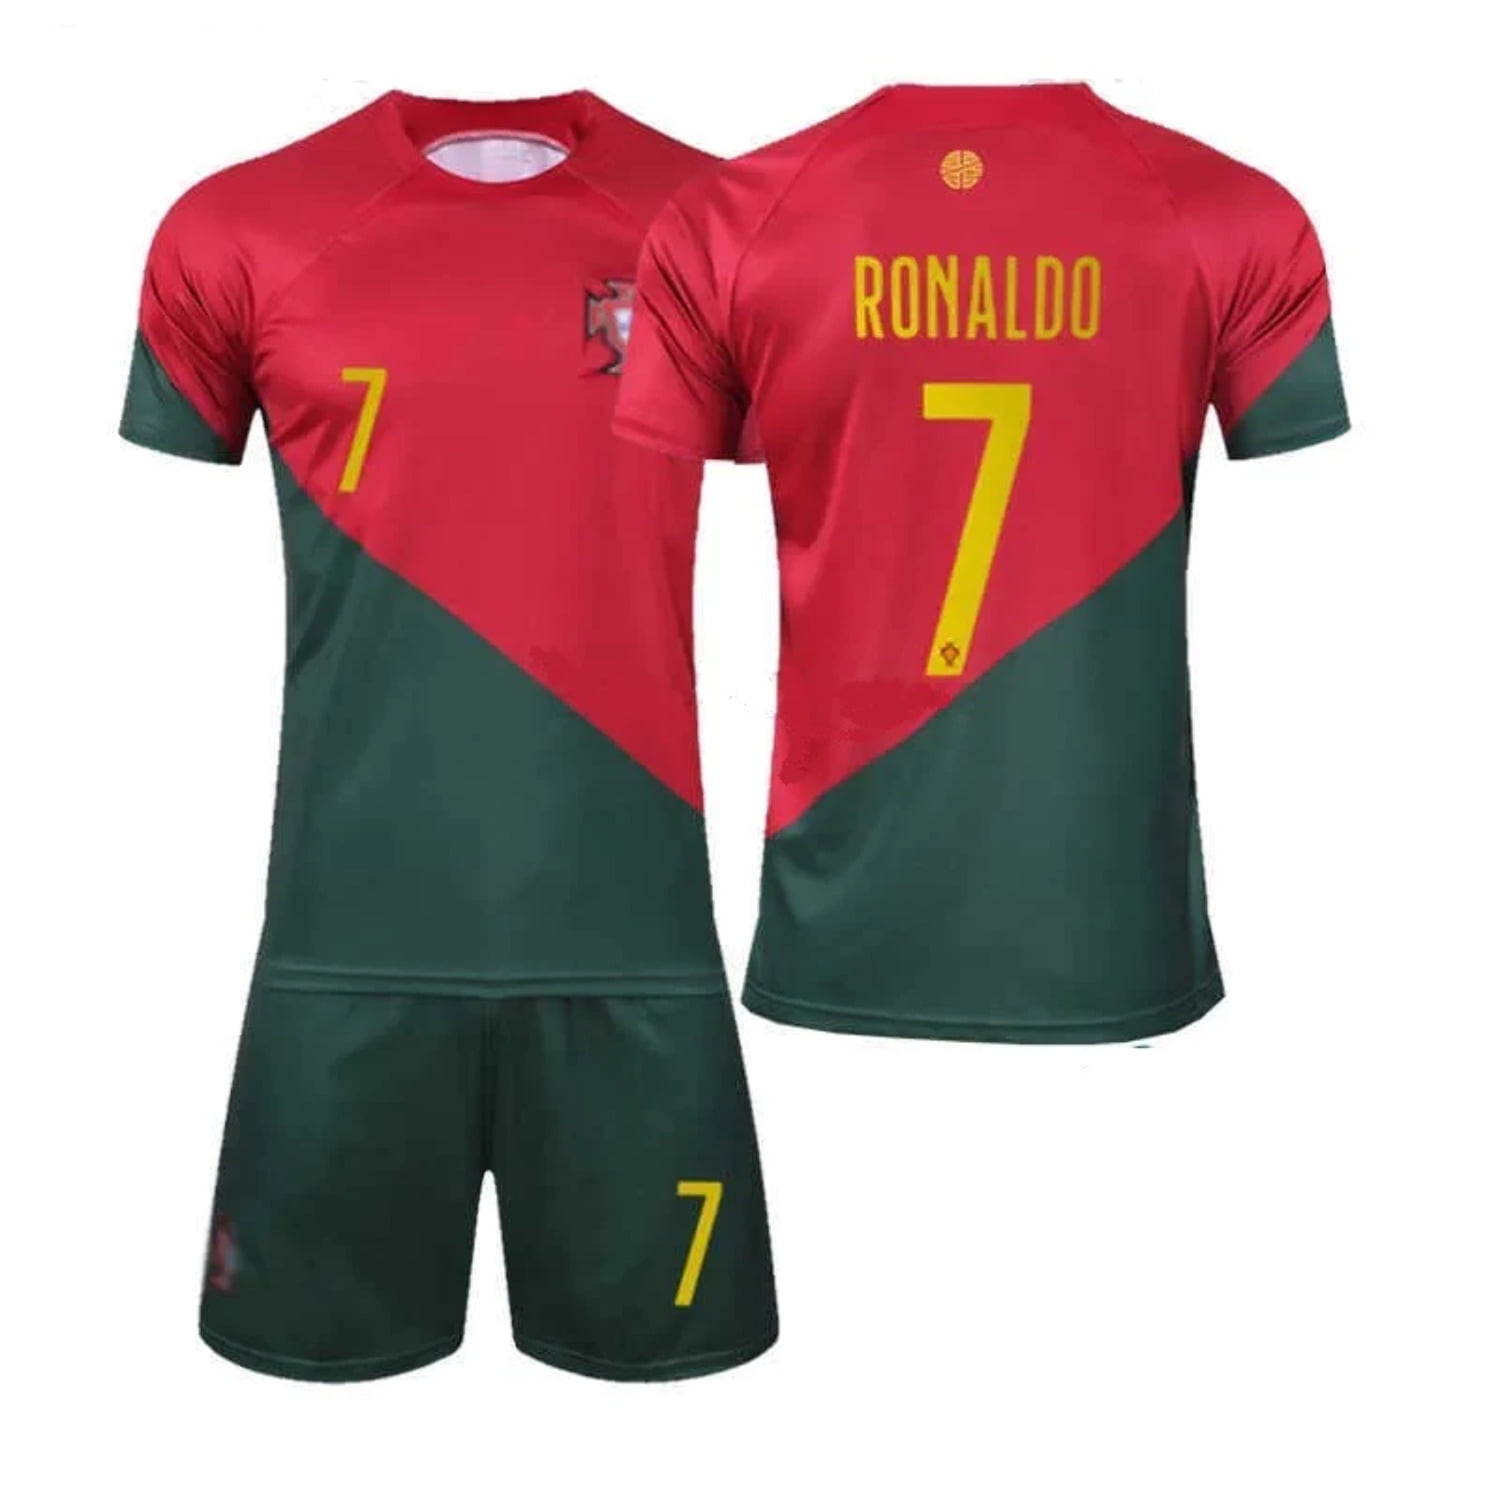 LeenBD Ronaldo #7 Home Kids Soccer Football Futbol Jersey & Shorts Set Youth Sizes